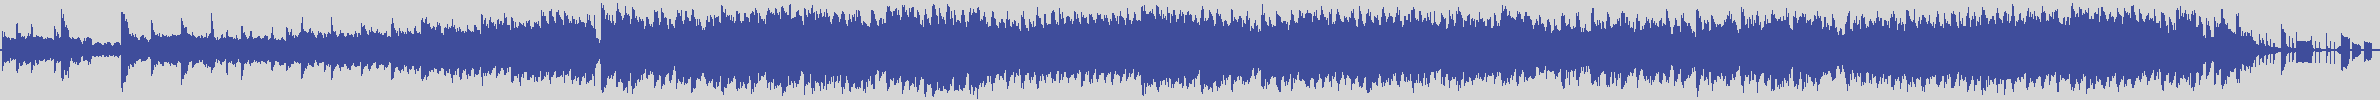 upr [UPR025] Phllox, Blue Belle None - Cold Song [Original Mix] audio wave form